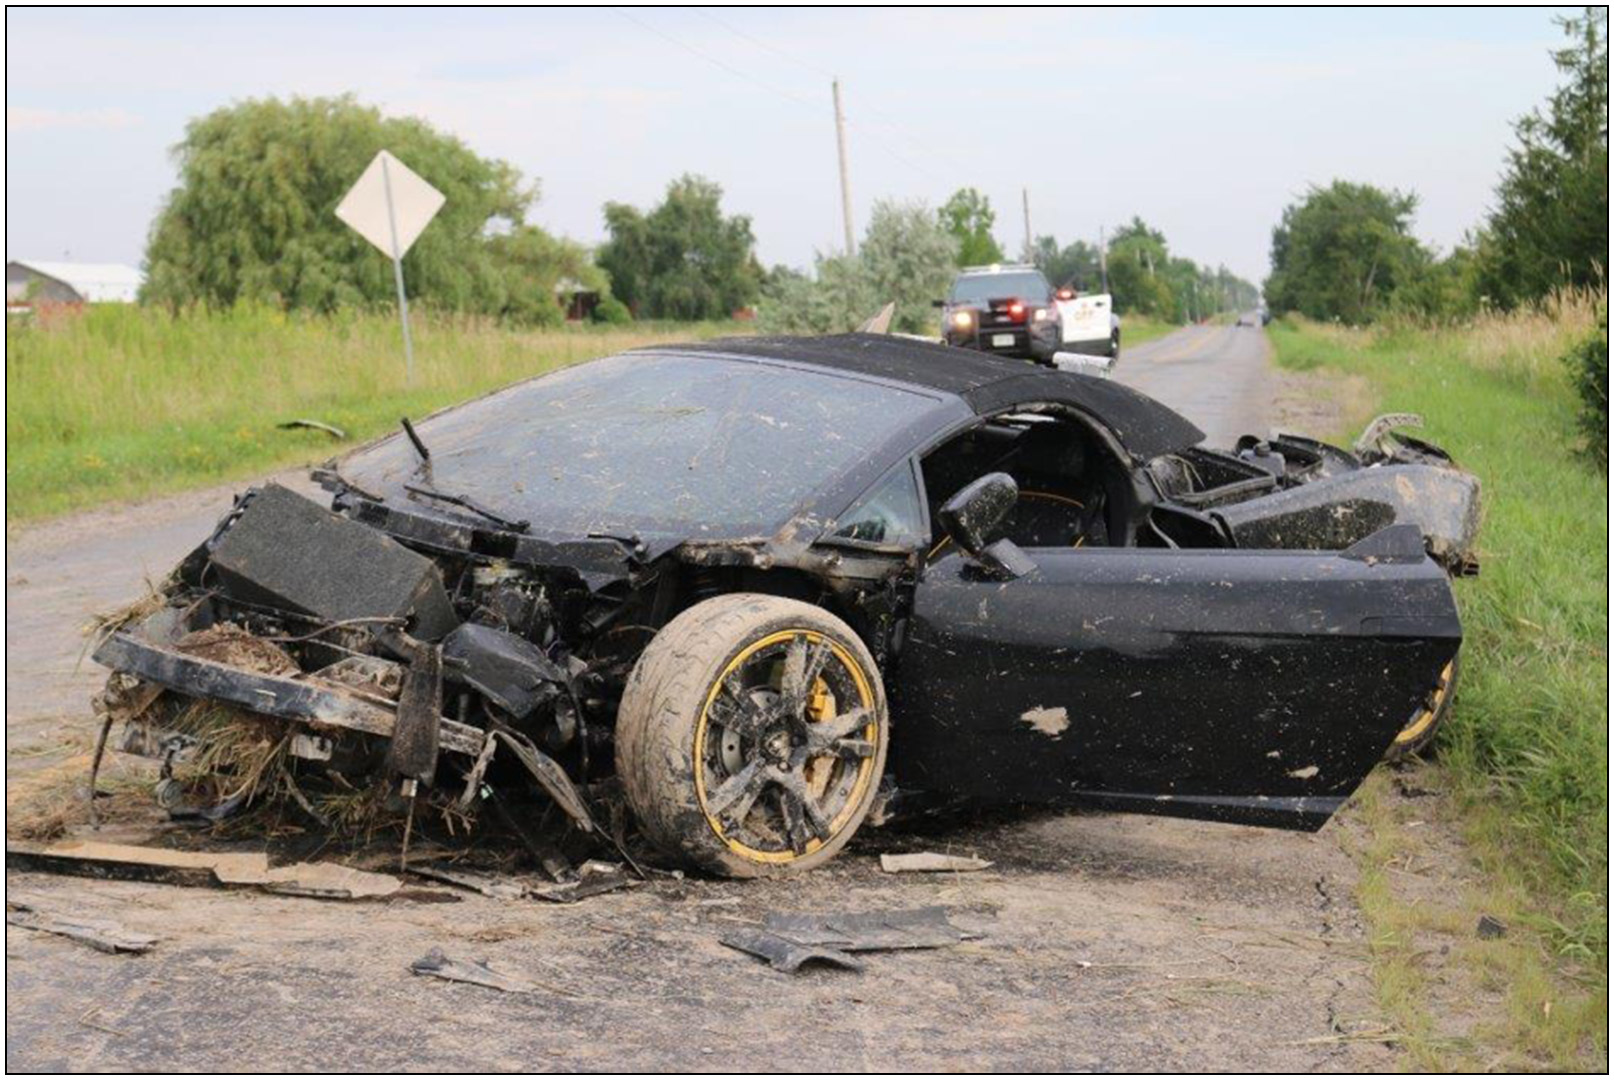 Photos of damaged Lamborghini at scene